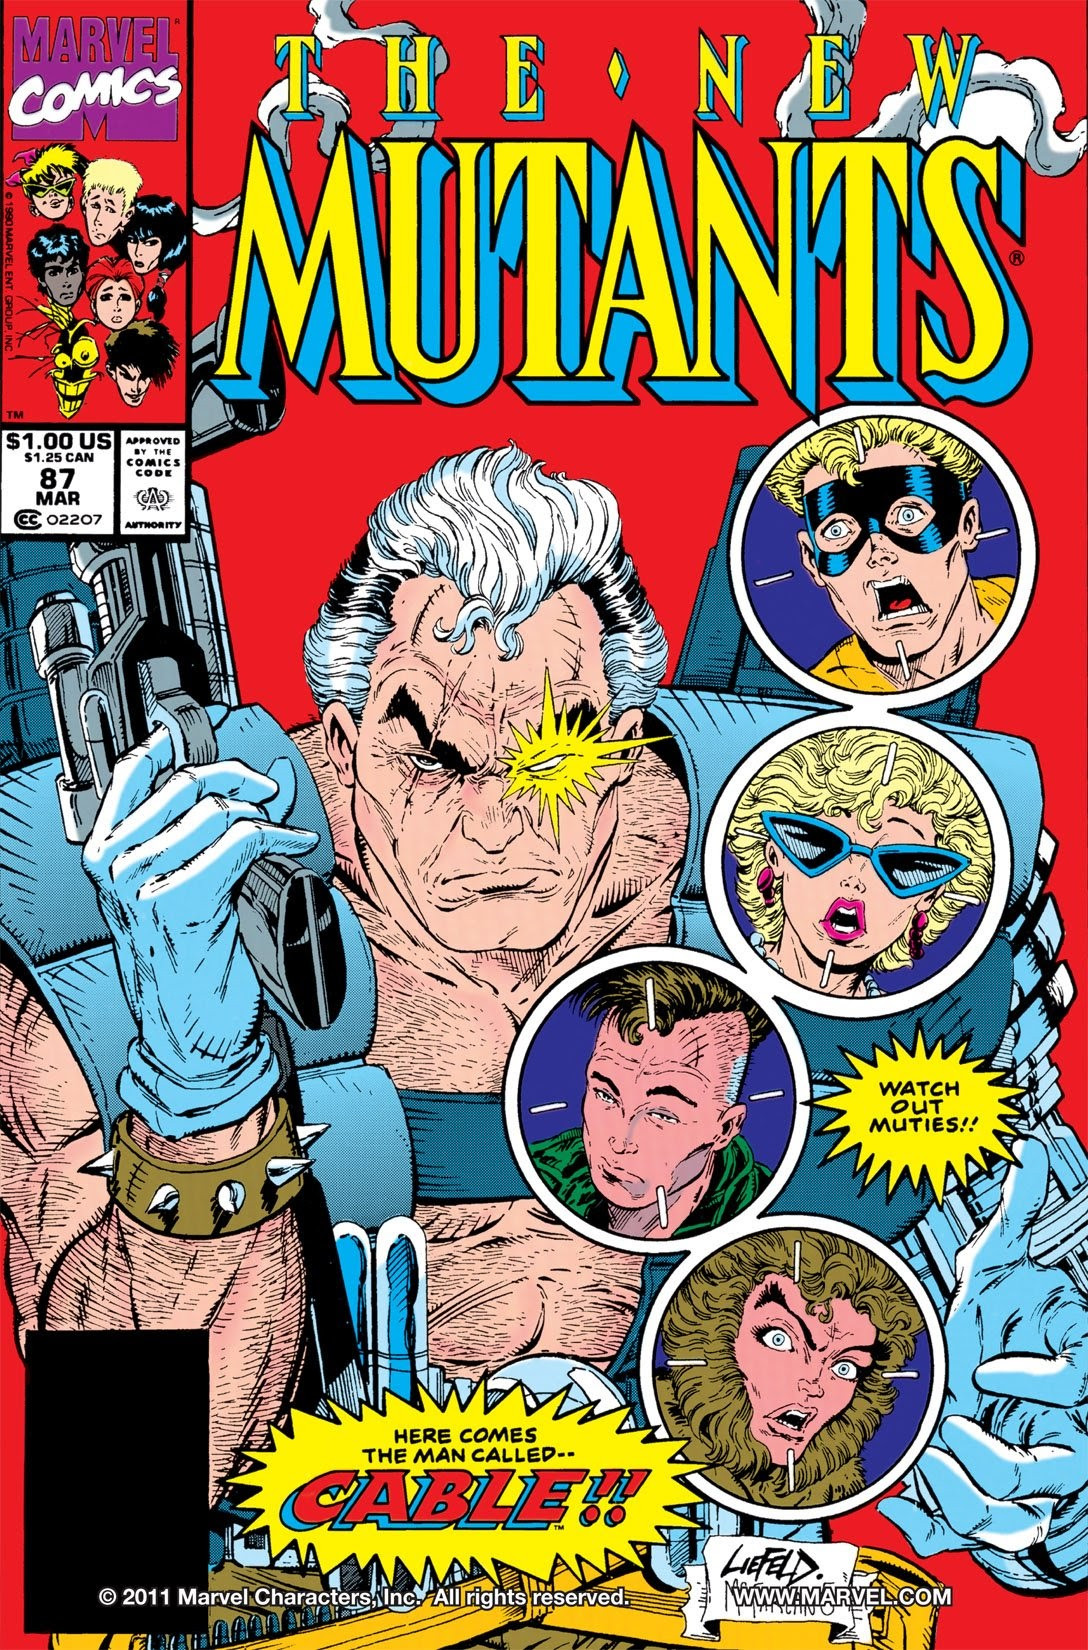 the New Mutants' Cast Vs. the Comic Book Characters